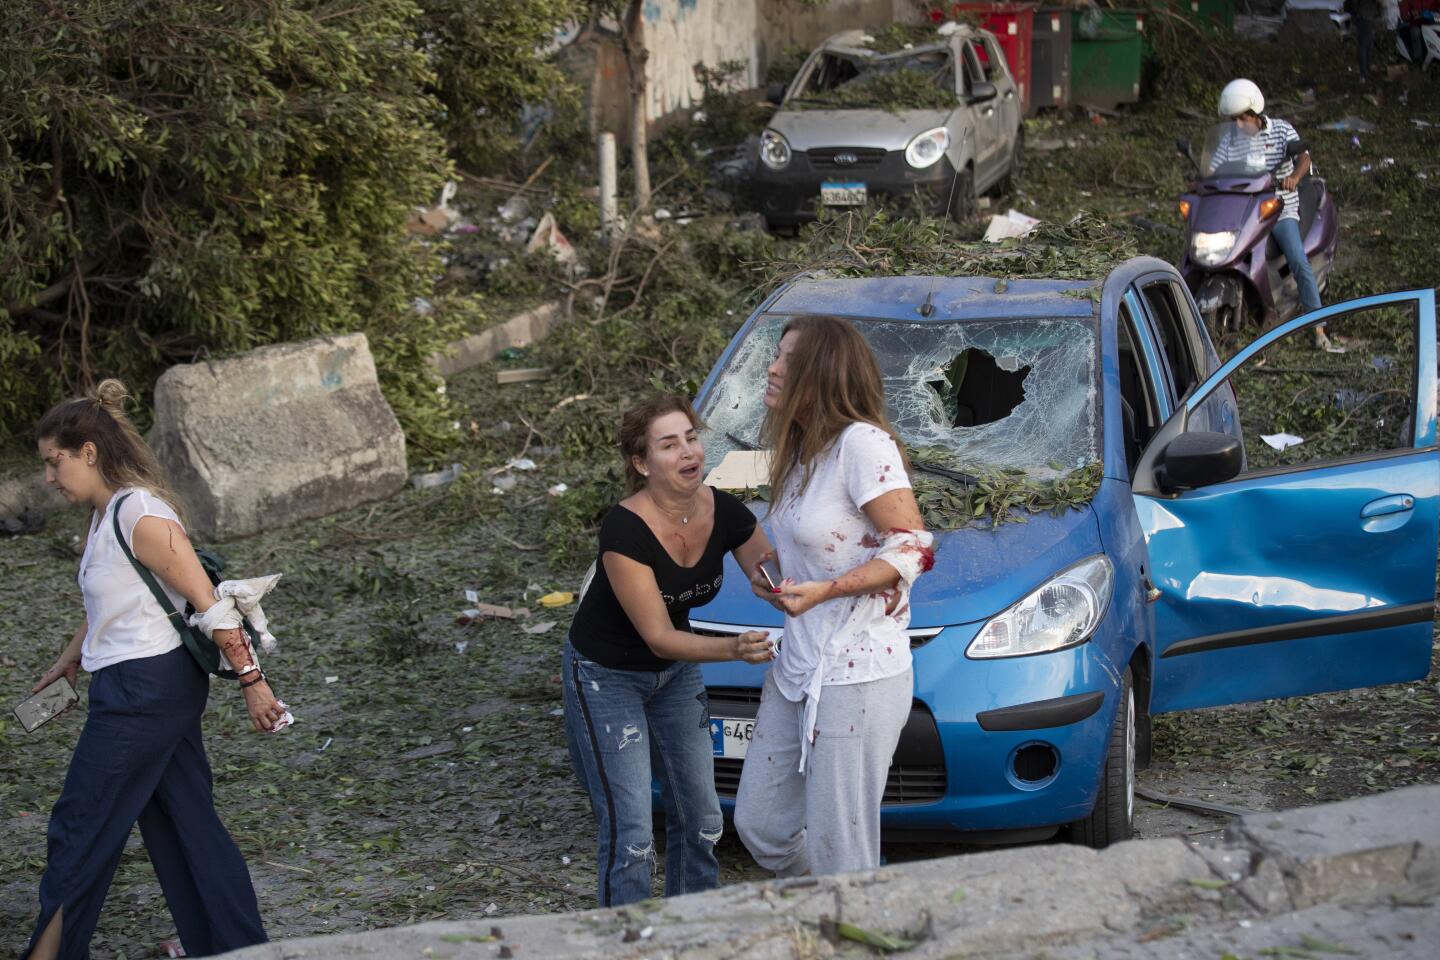 Lebanon Explosion Photo Gallery